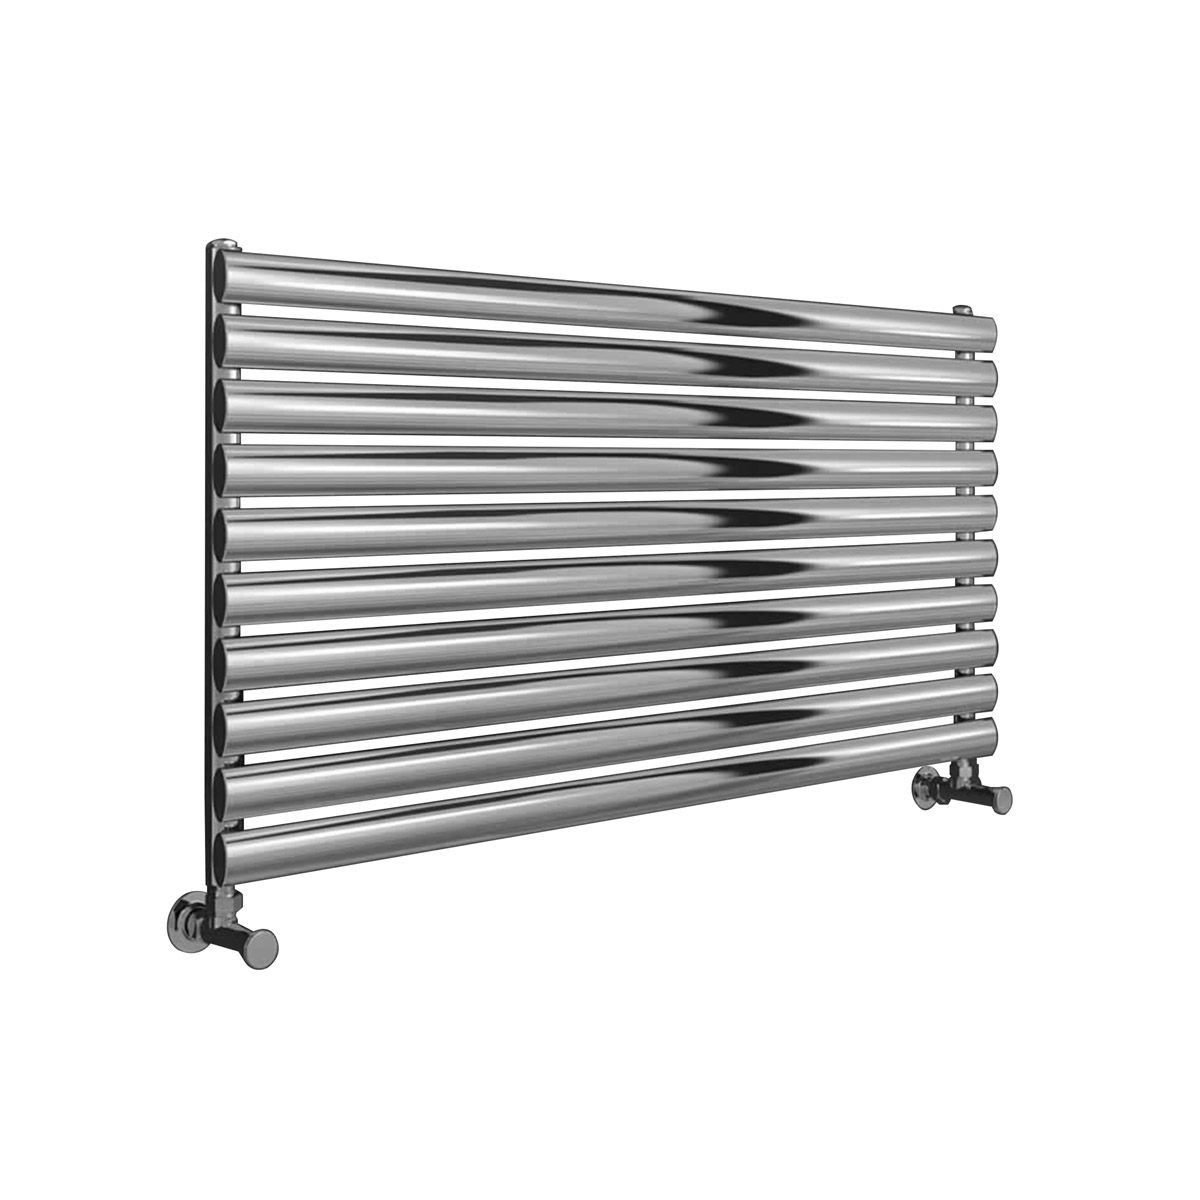 Reina Artena single polished stainless steel designer radiator 590 x 1200